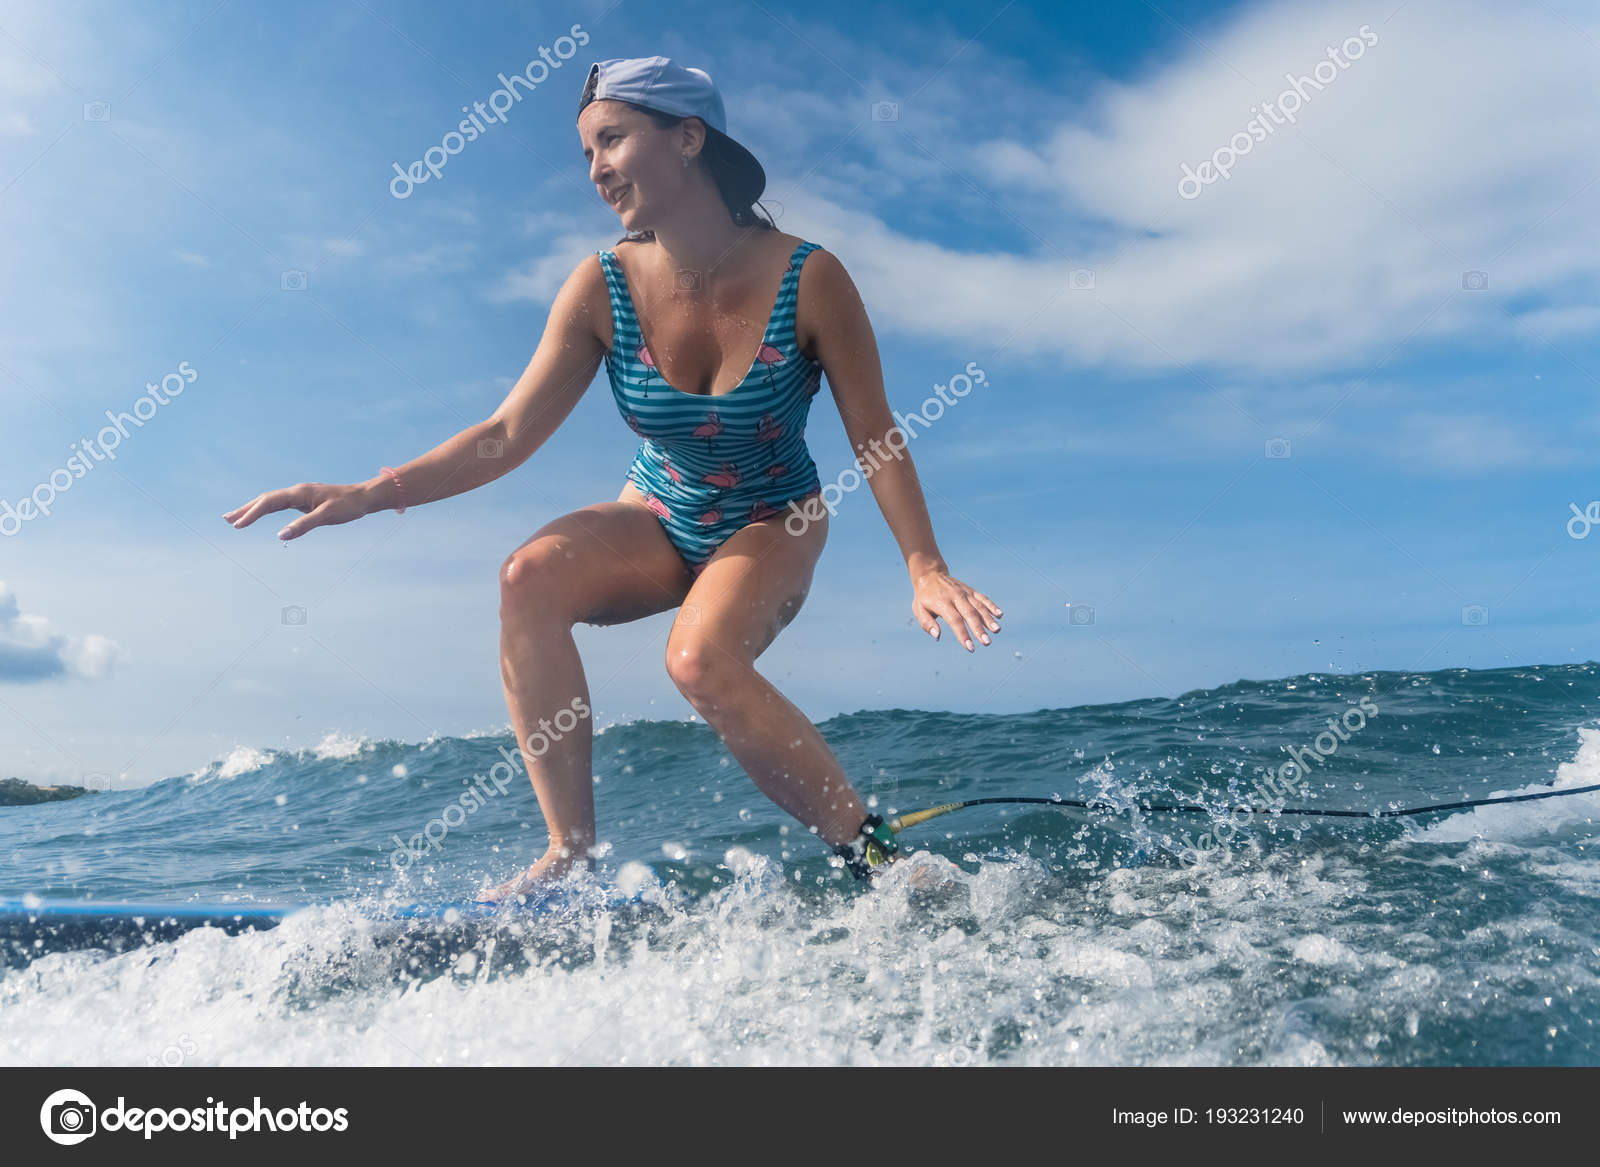 https://st3.depositphotos.com/16458154/19323/i/1600/depositphotos_193231240-stock-photo-side-view-woman-cap-swimming.jpg